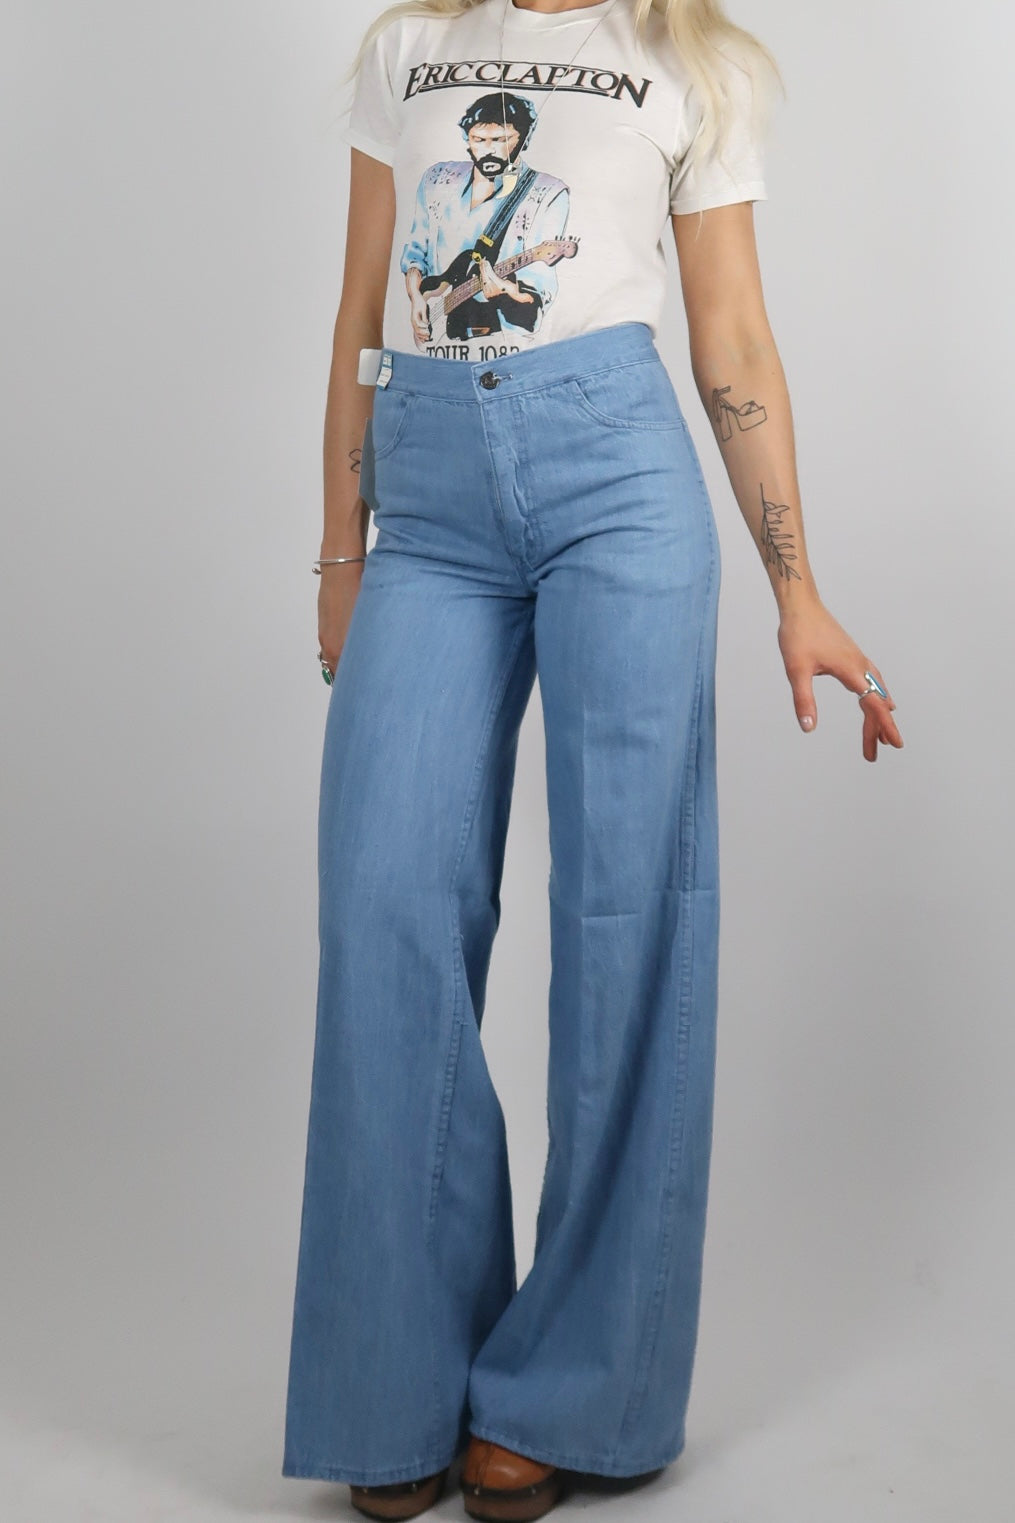 1970s Dead-stock jeans